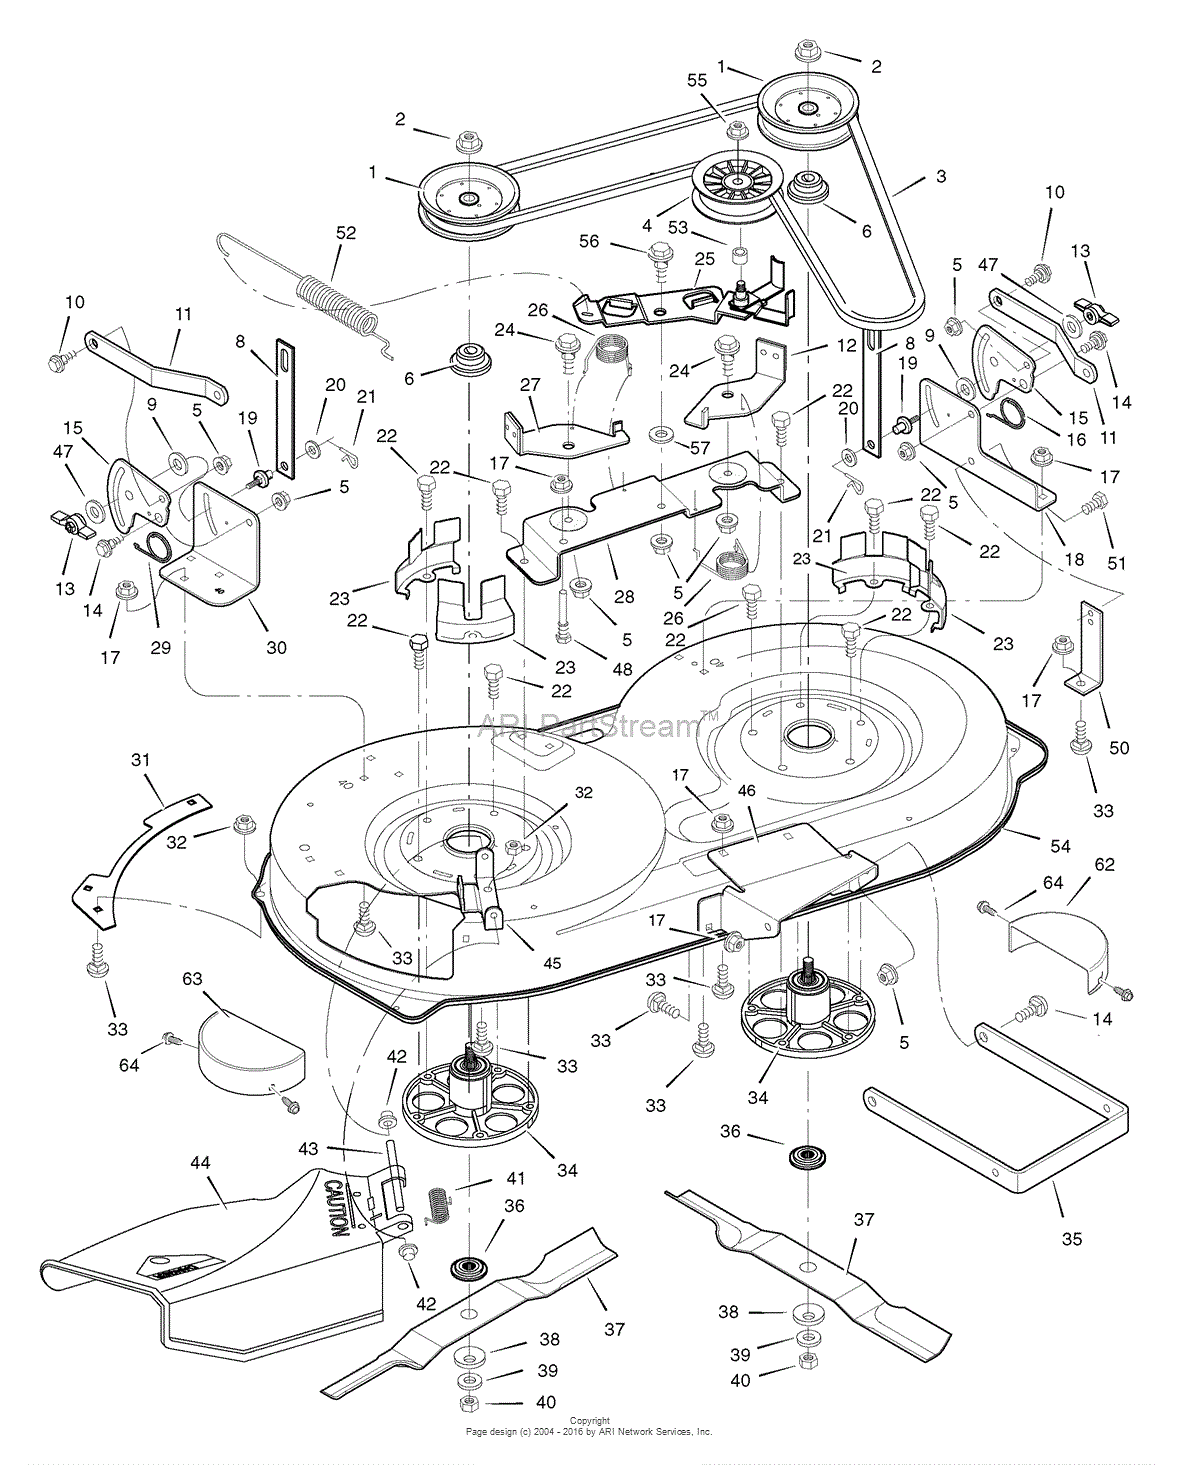 Murray 385003x108 - Rover Clipper, Lawn Tractor (2007) Parts Diagram